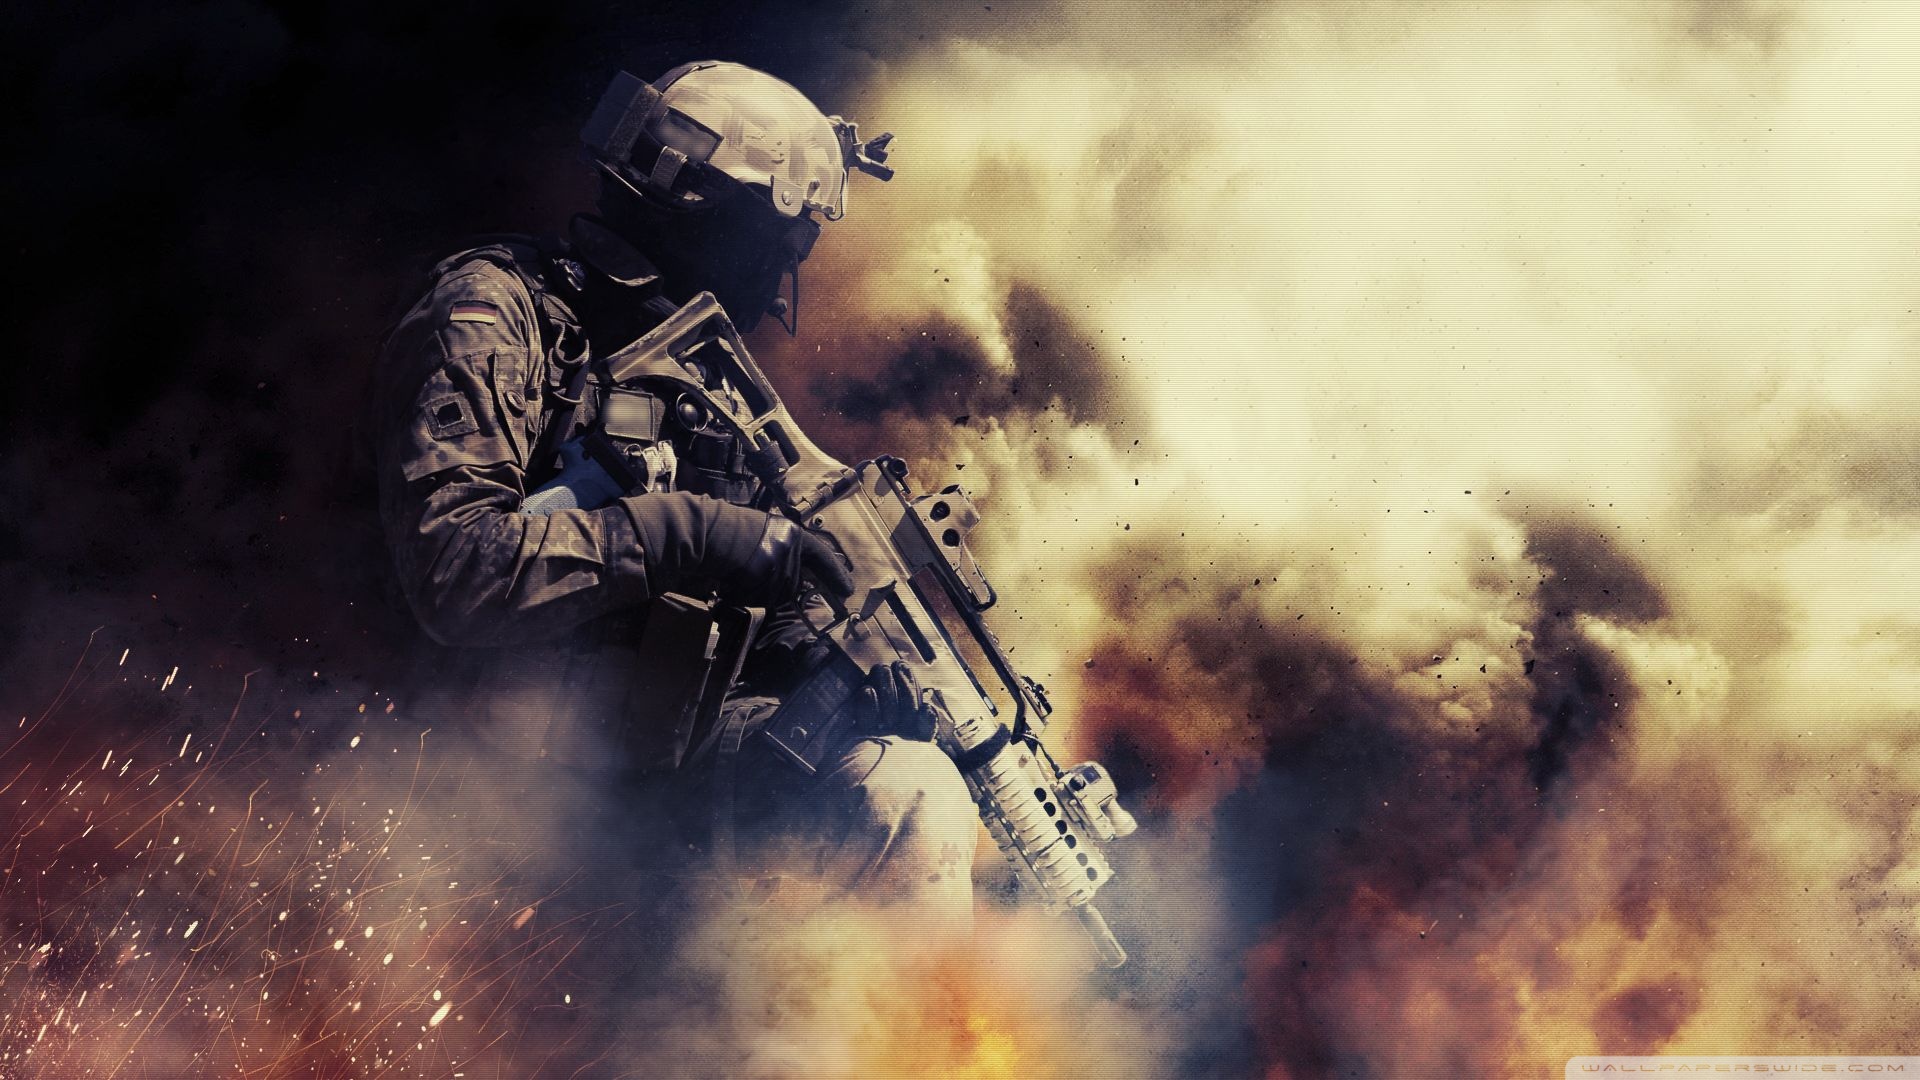 ksk wallpaper,fumar,soldado,evento,militar,bombero